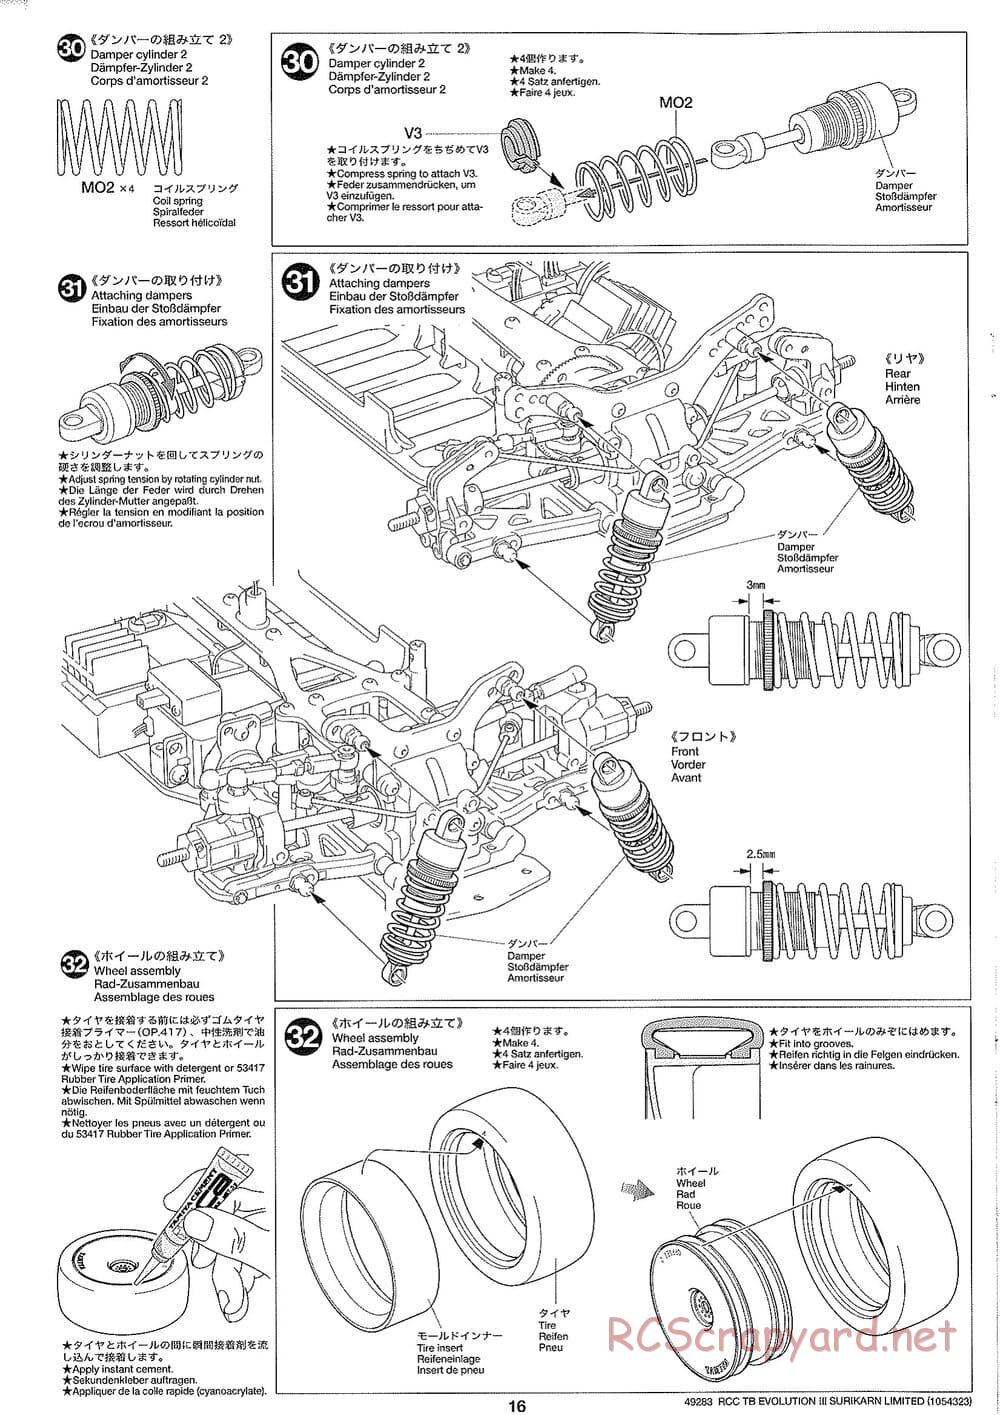 Tamiya - TB Evolution III Surikarn Limited Chassis - Manual - Page 16